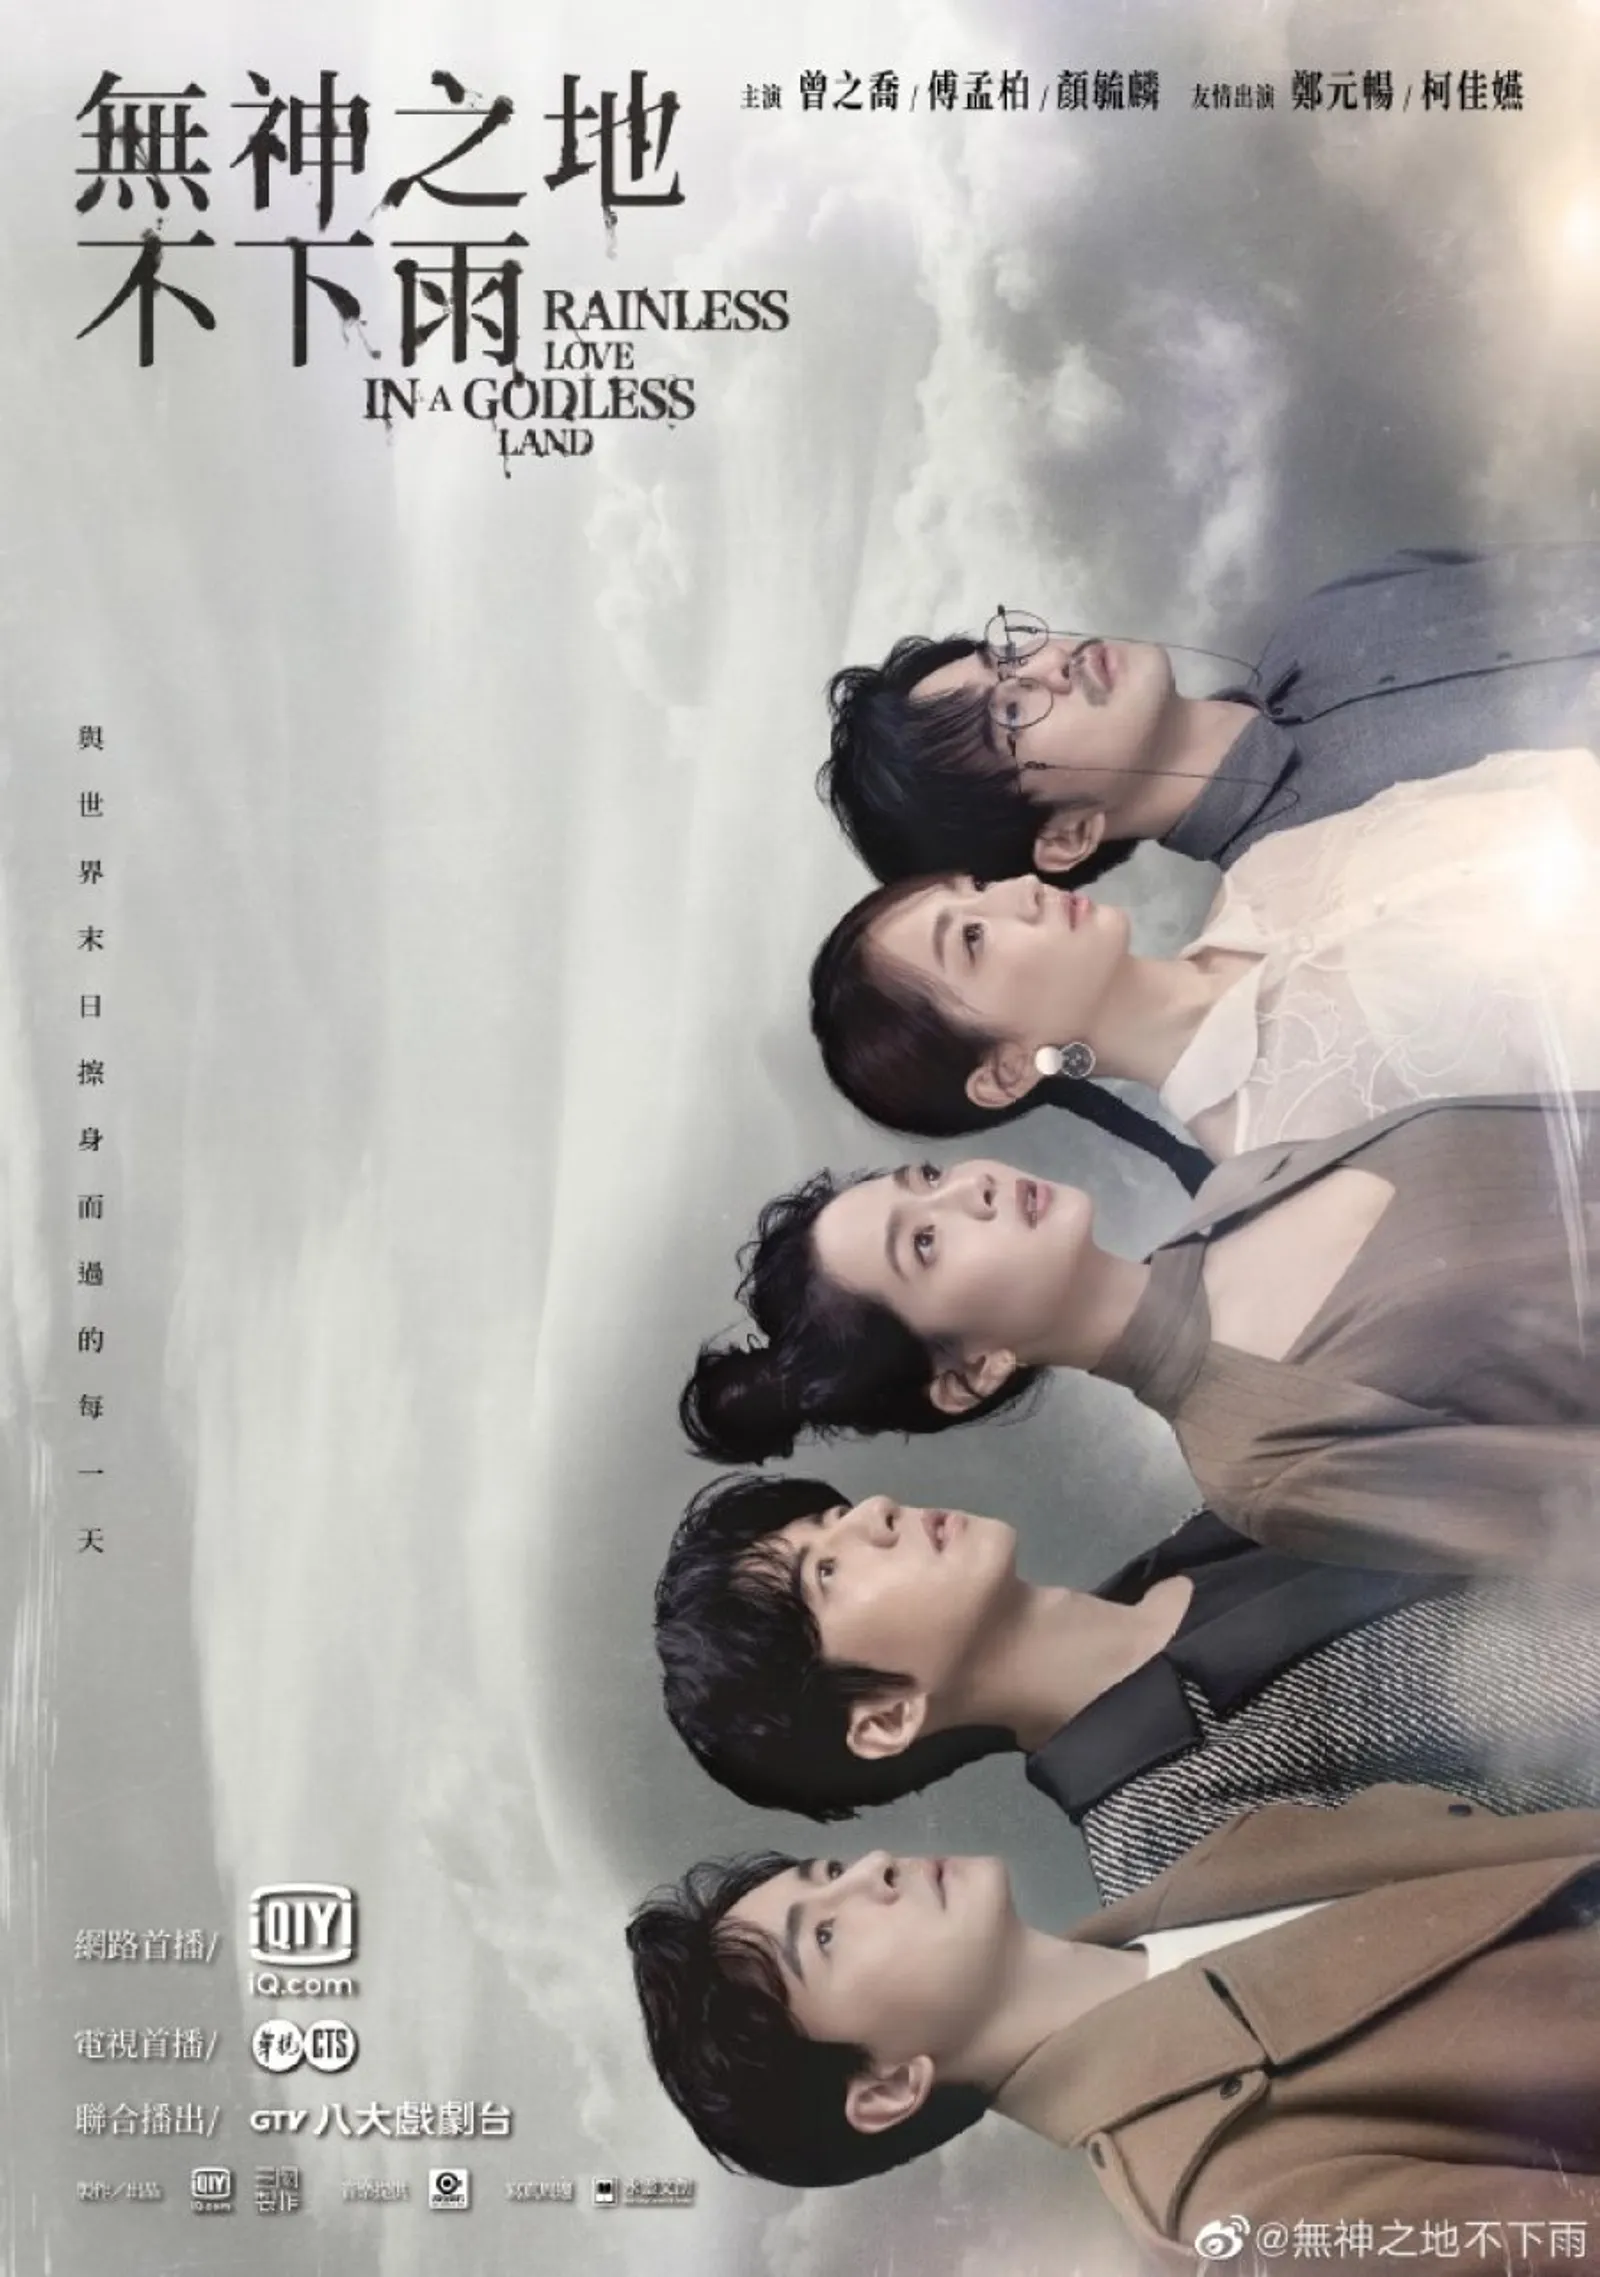 5 Rekomendasi Drama Ringan Tiongkok Oktober 2021, Wajib Ditonton